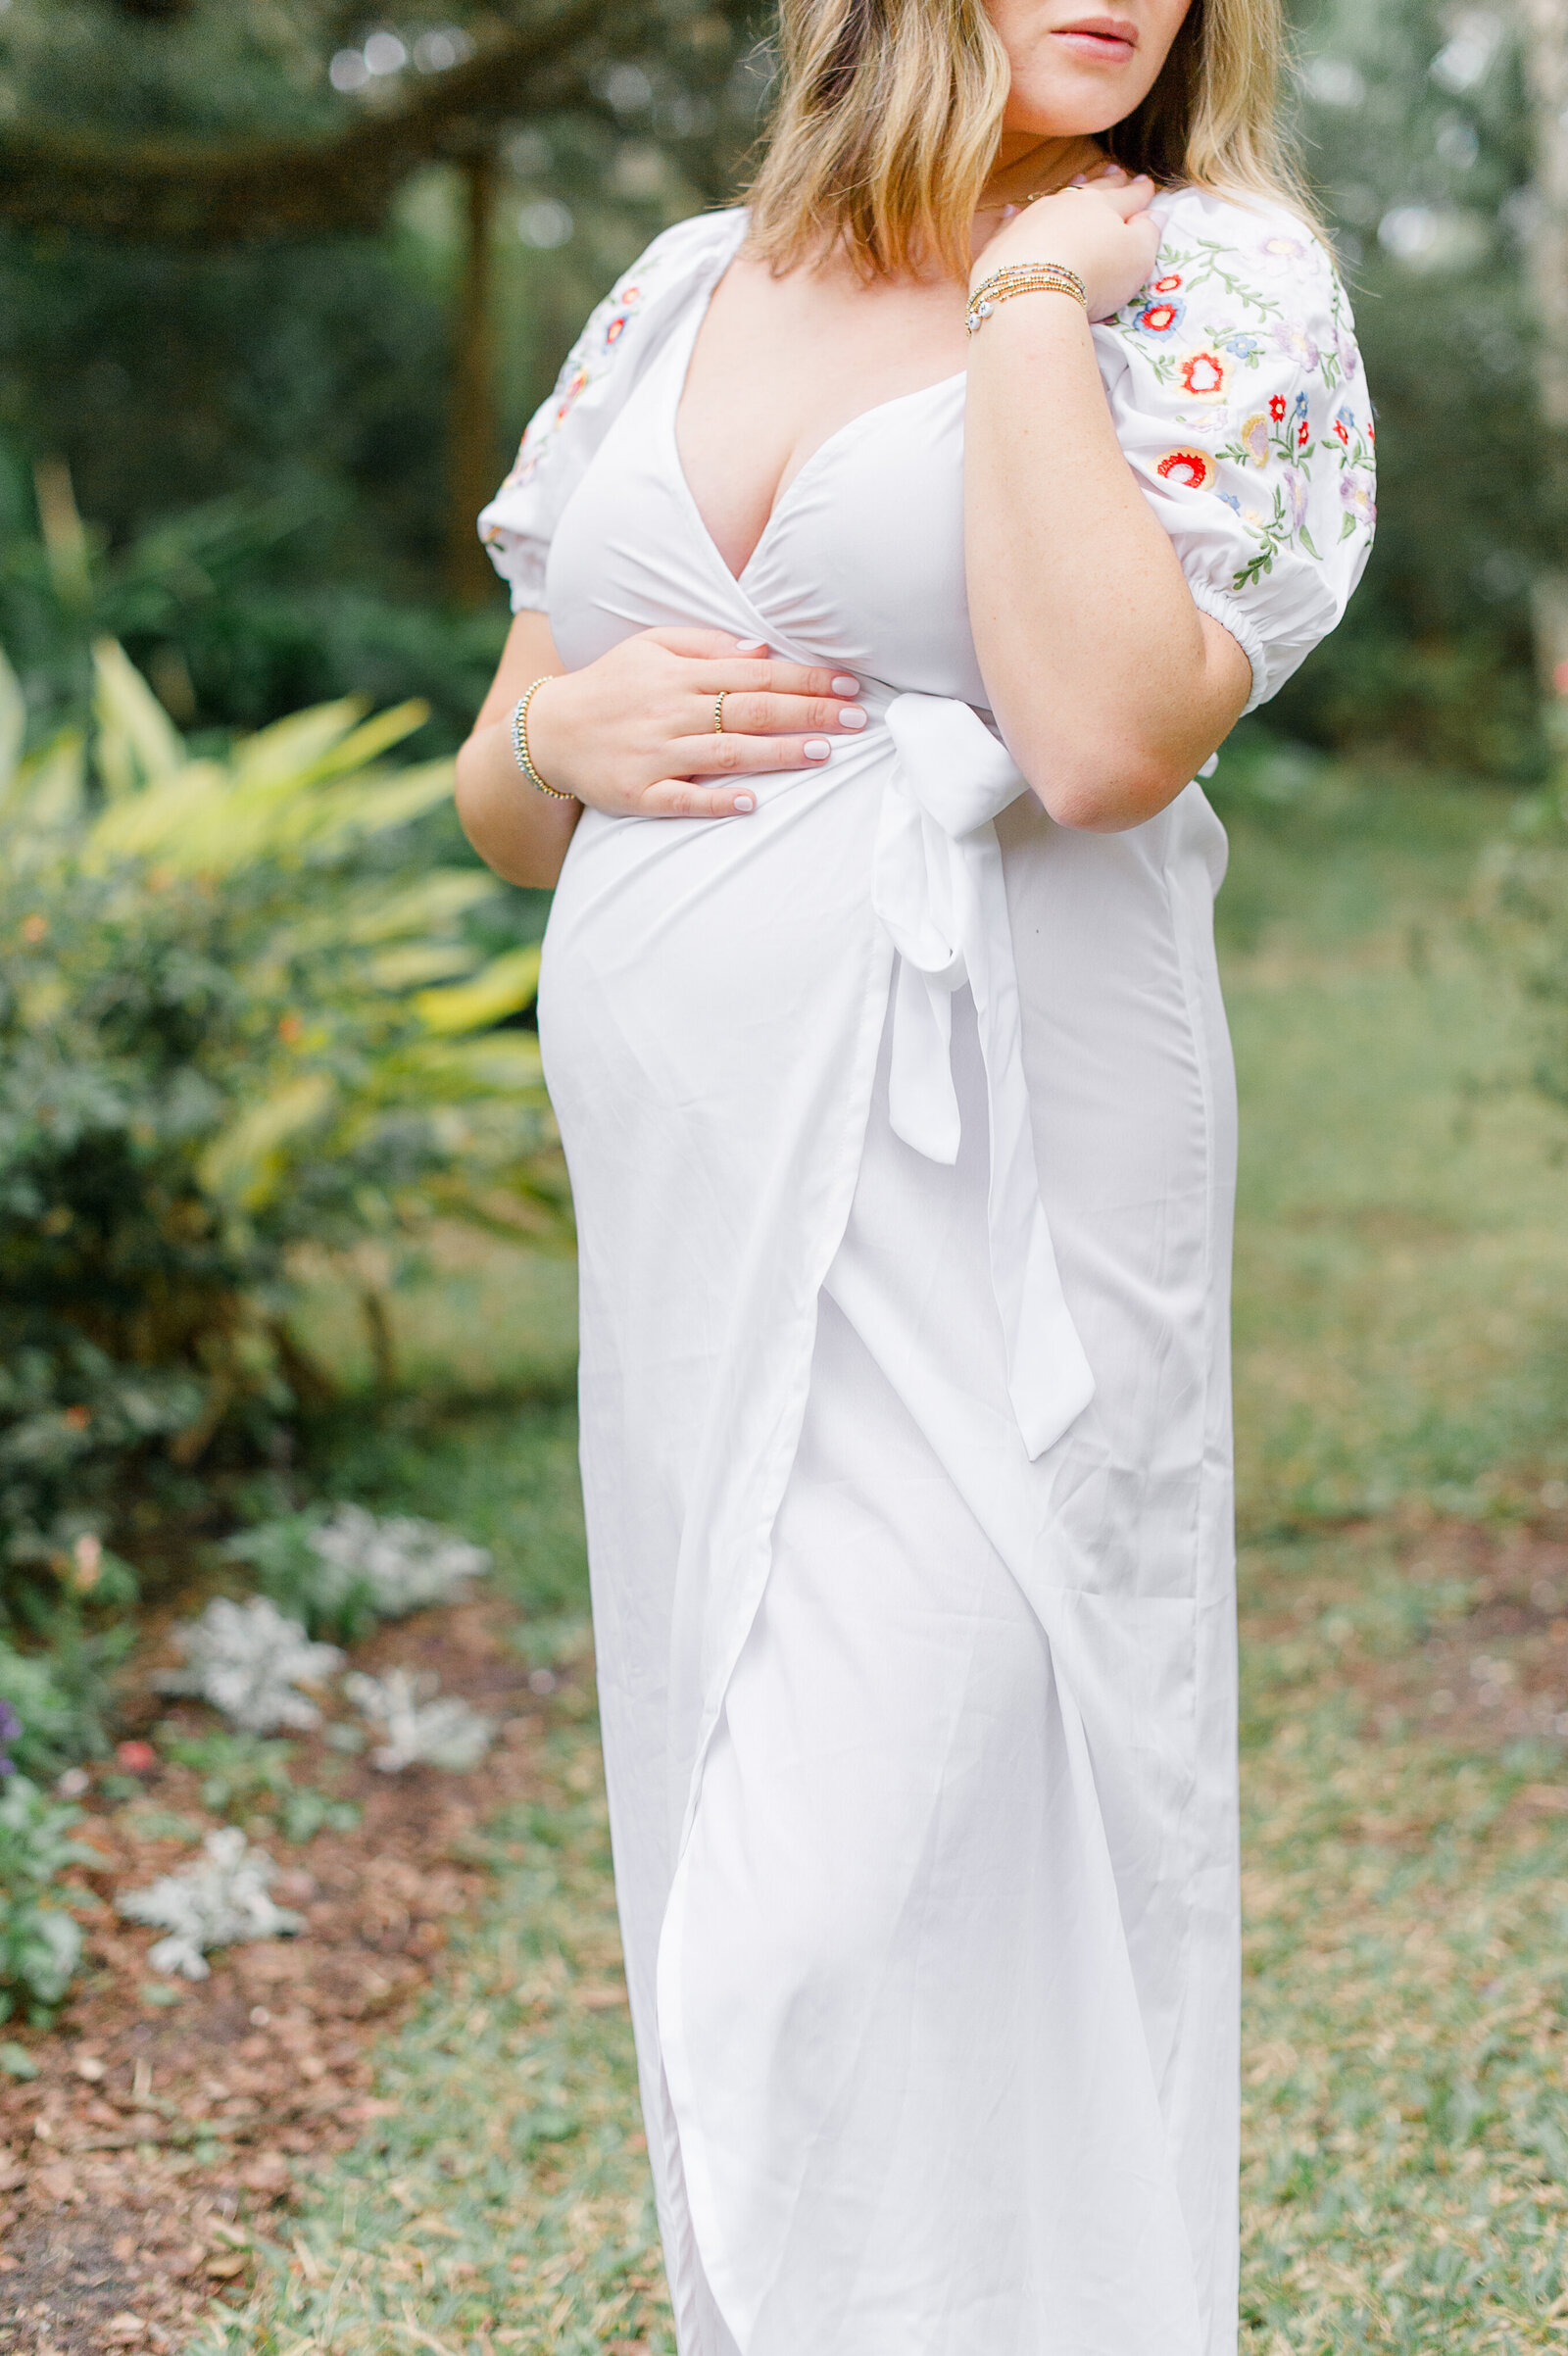 Orlando-Maternity-Photographer-20